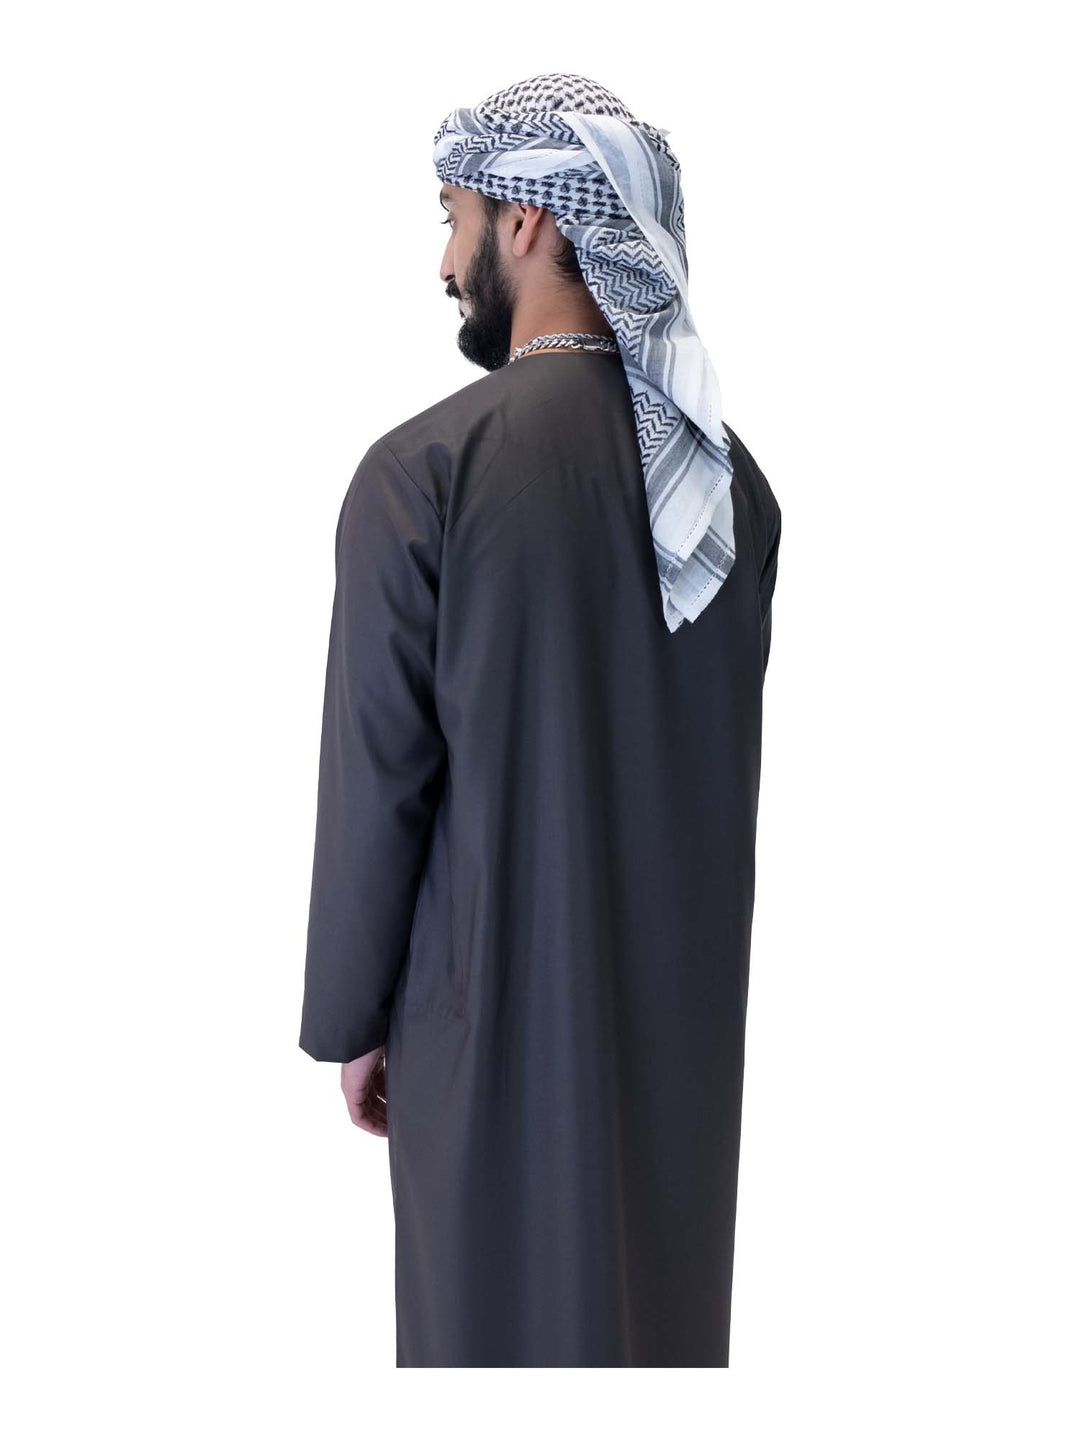 Islamic Impressions - Men's Arab Style Scarf - Black & White